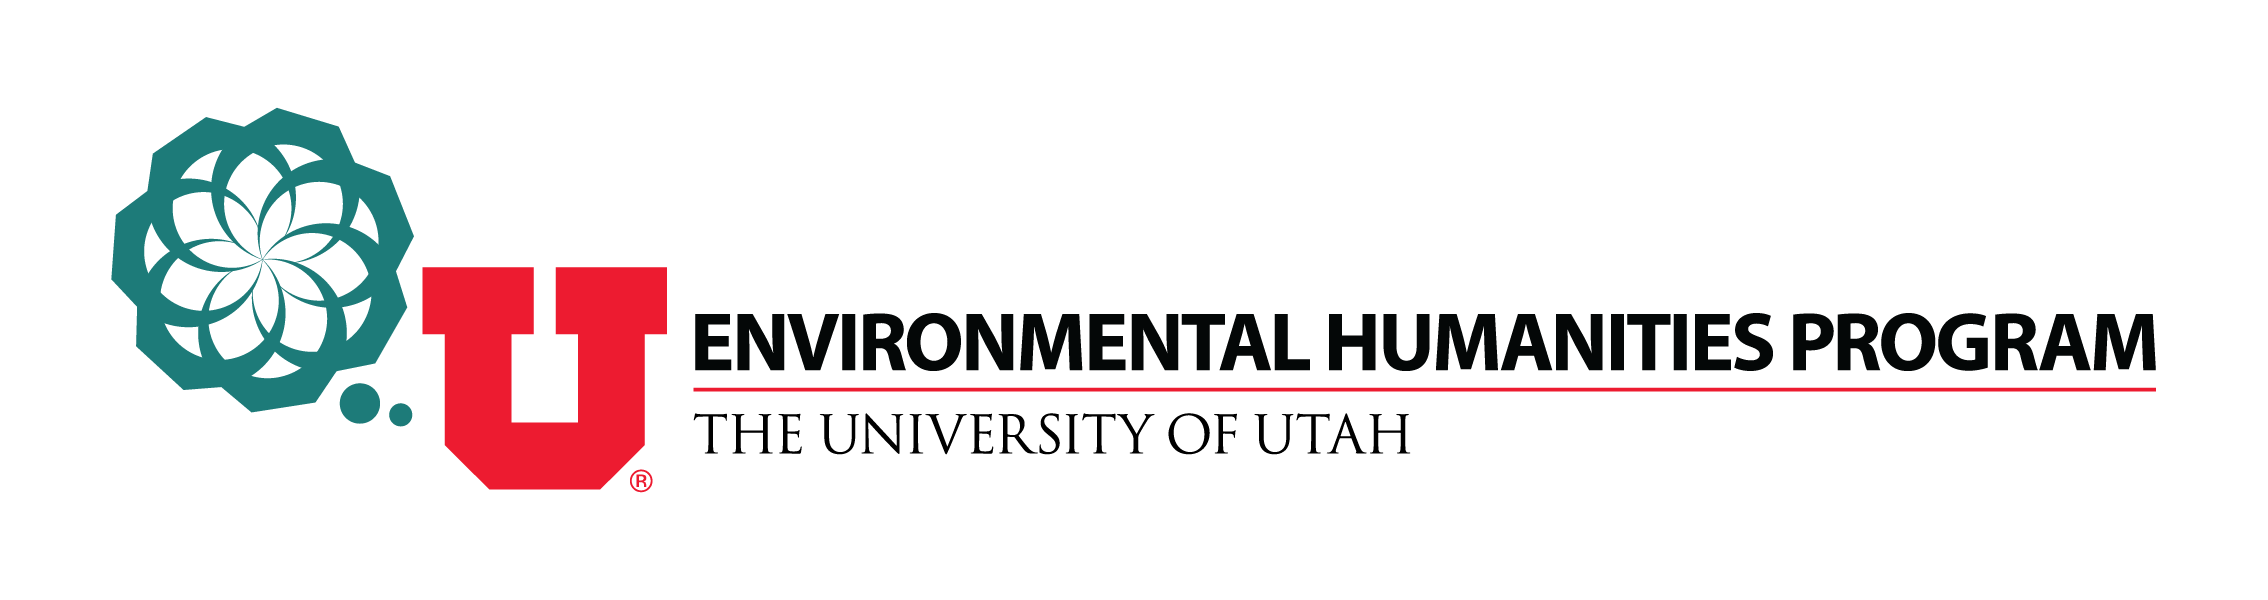 Environmental Humanities program logo